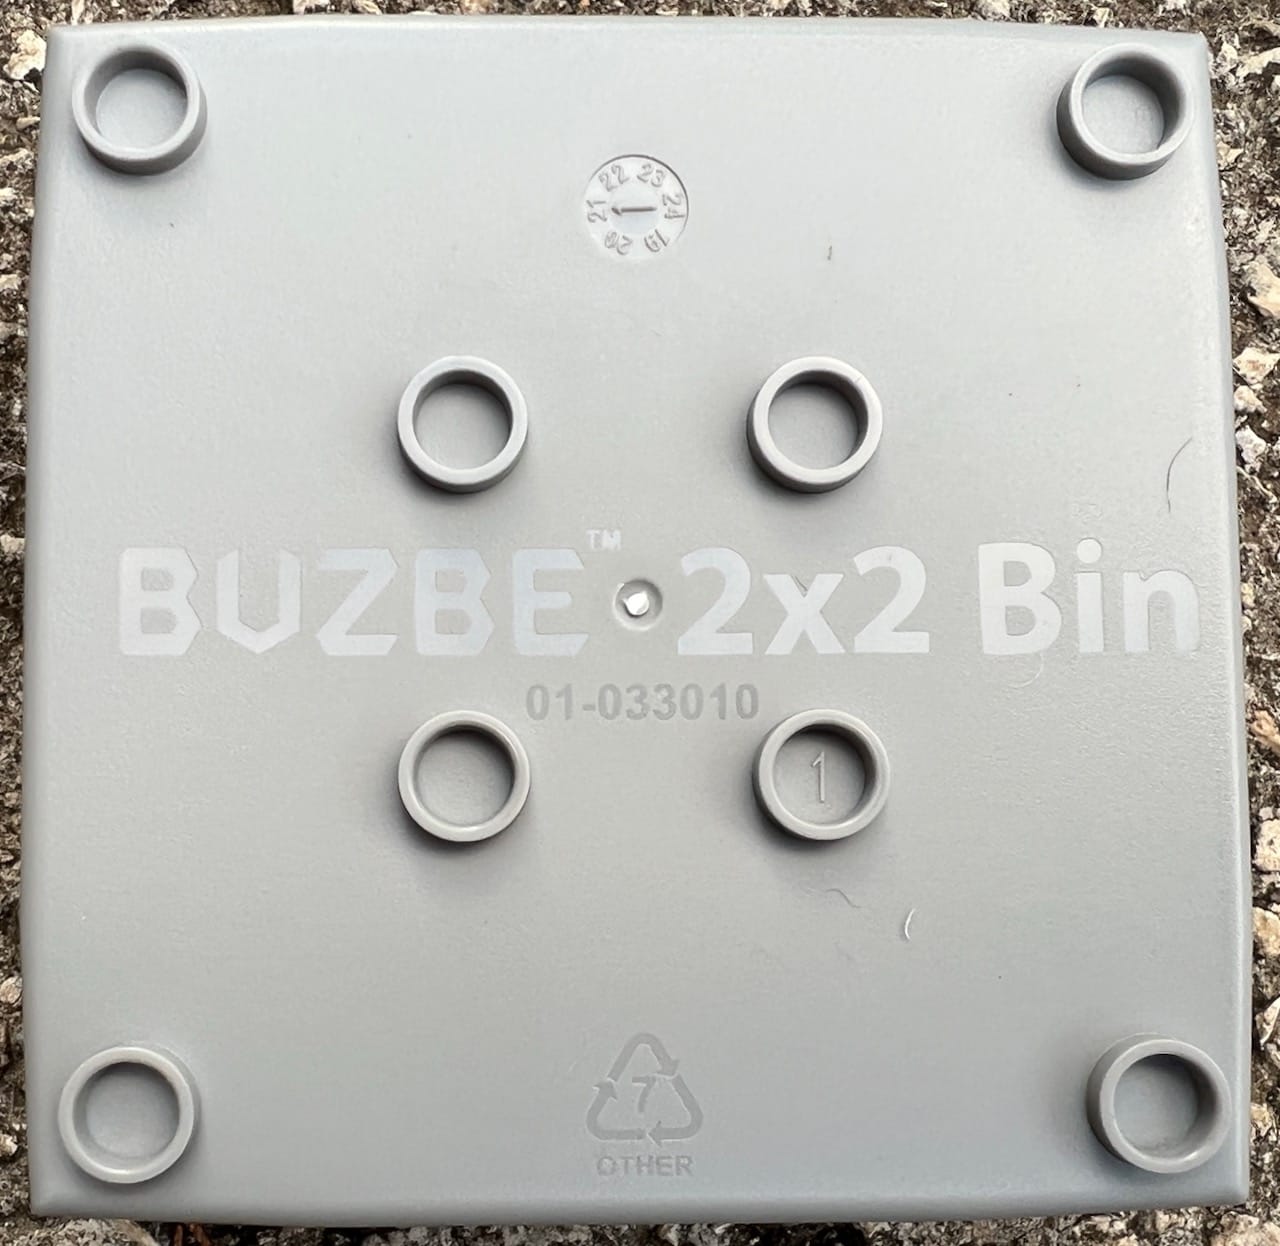 Bottom of Buzbe 2x2 Bin